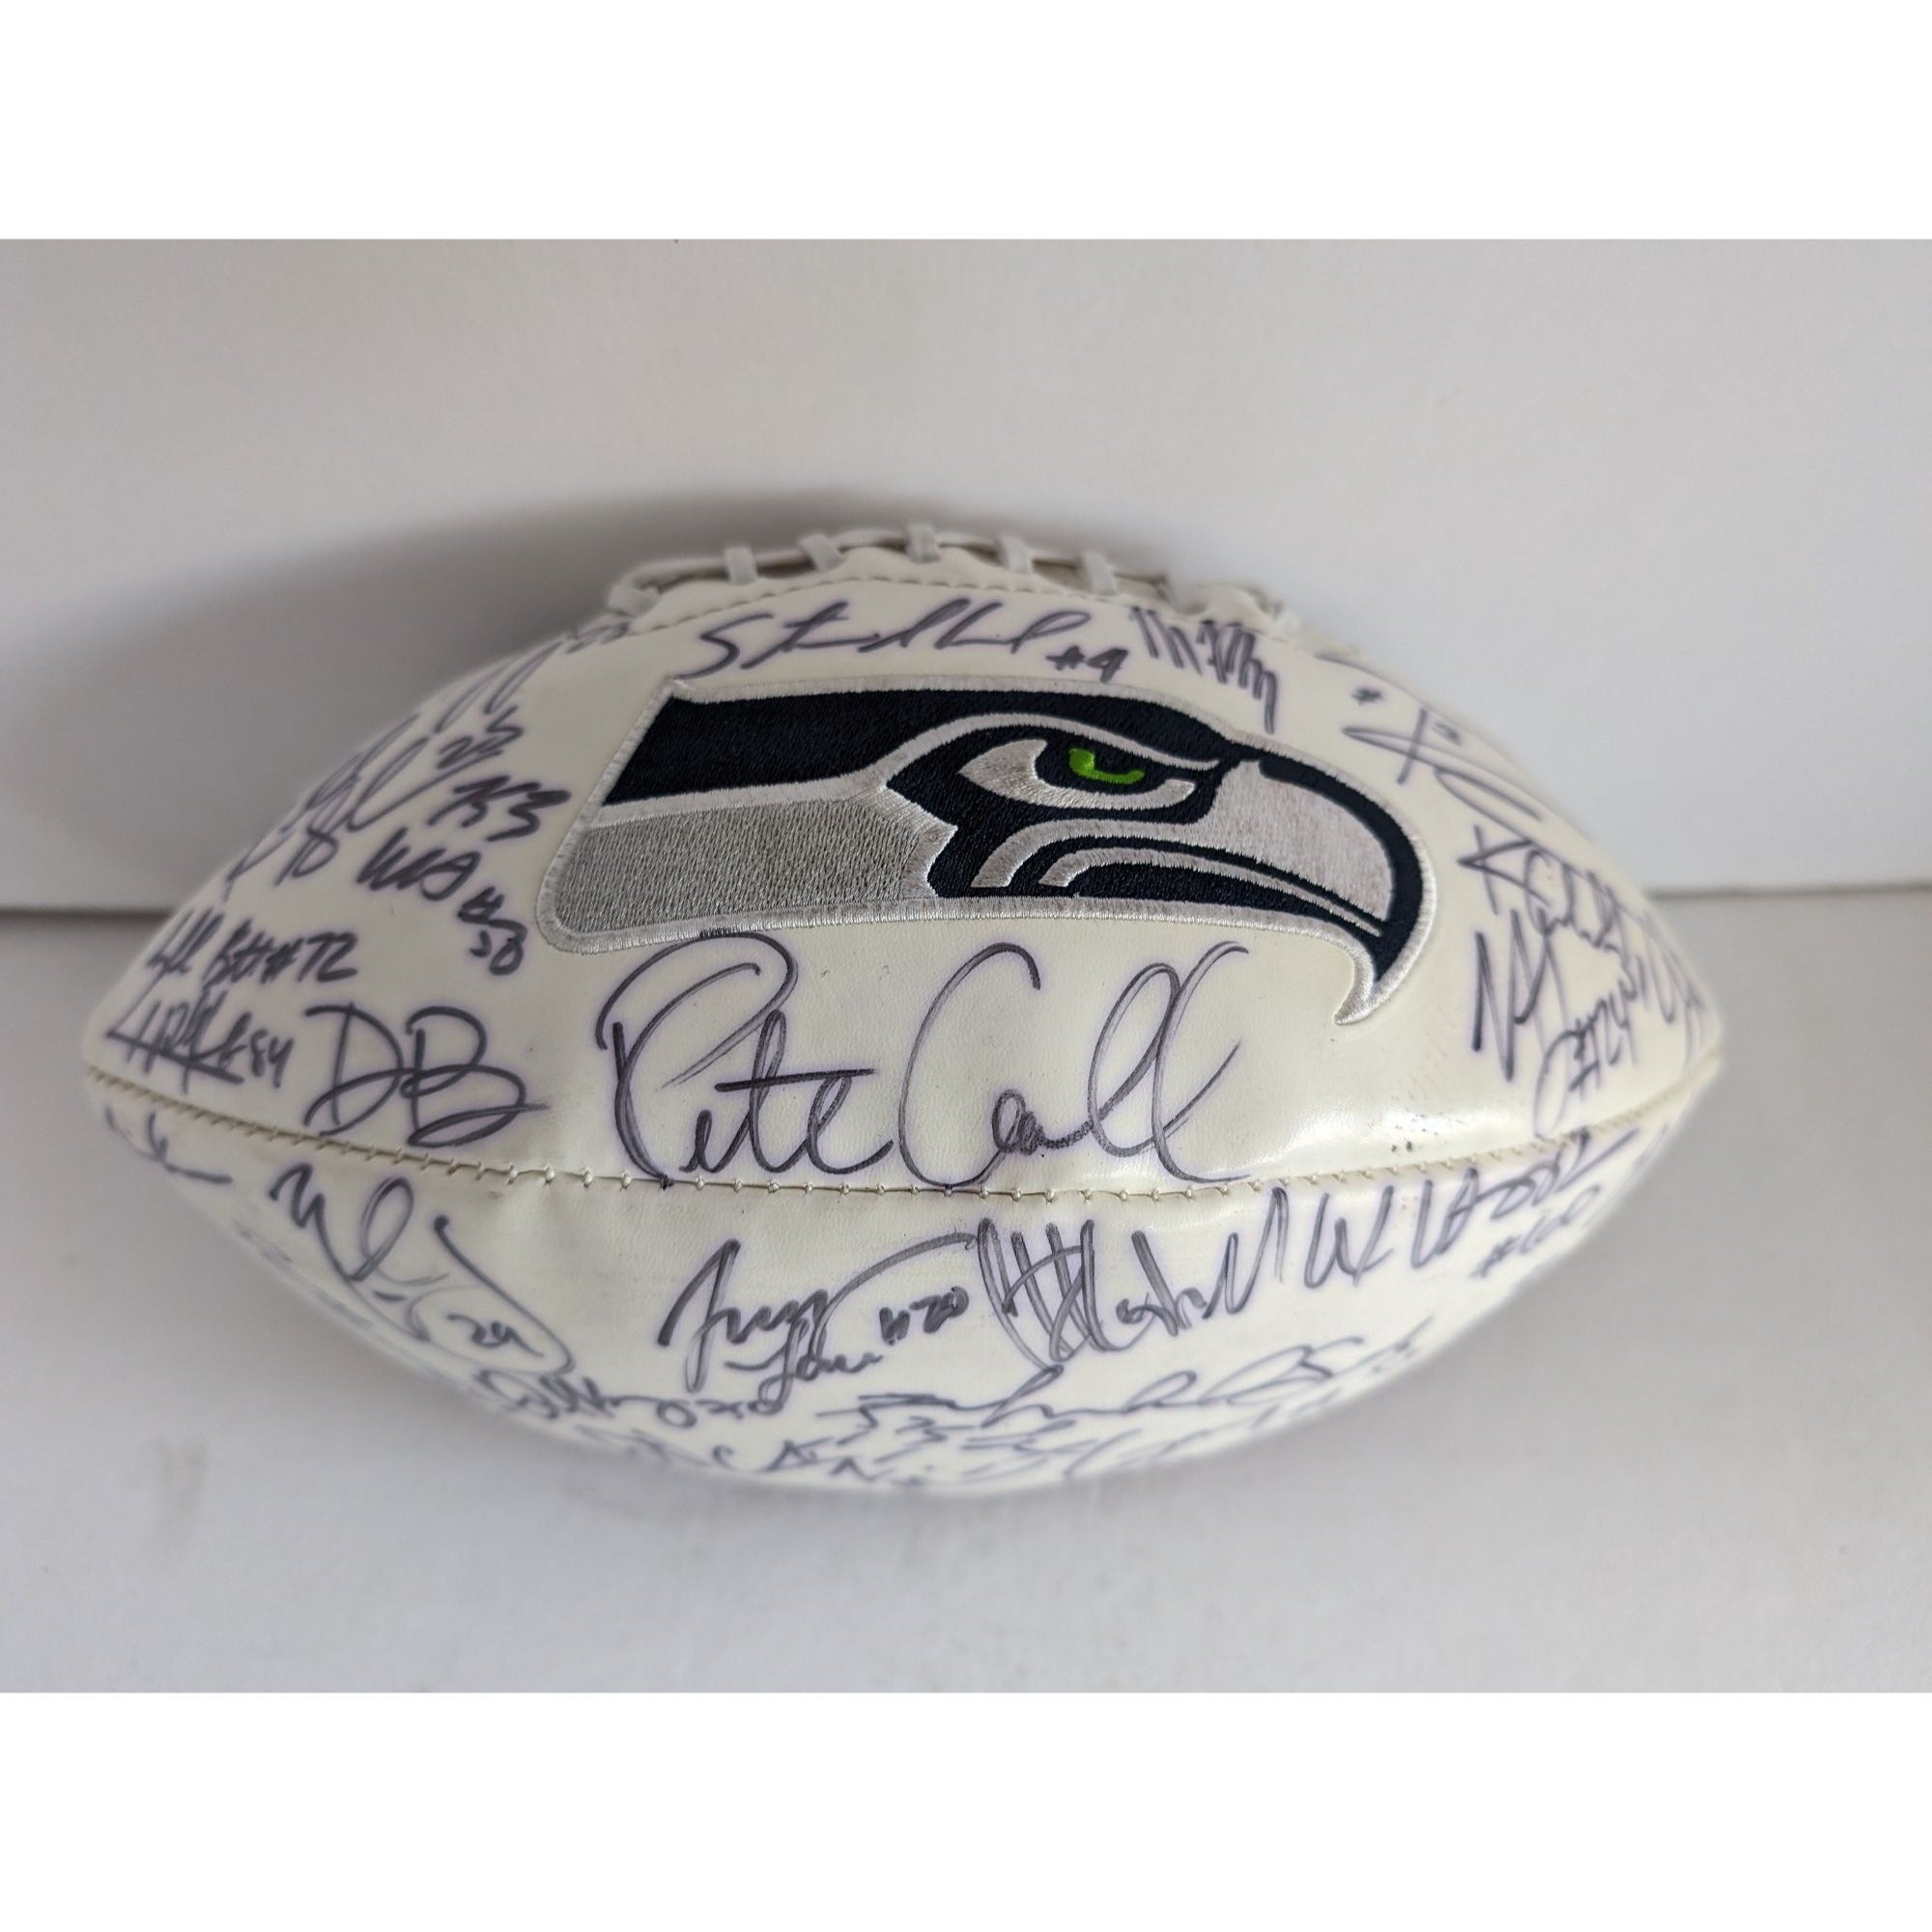 Seattle Seahawks Marshawn Lynch Pete Carroll Russell Wilson Richard Sherman Super Bowl champions team signed football